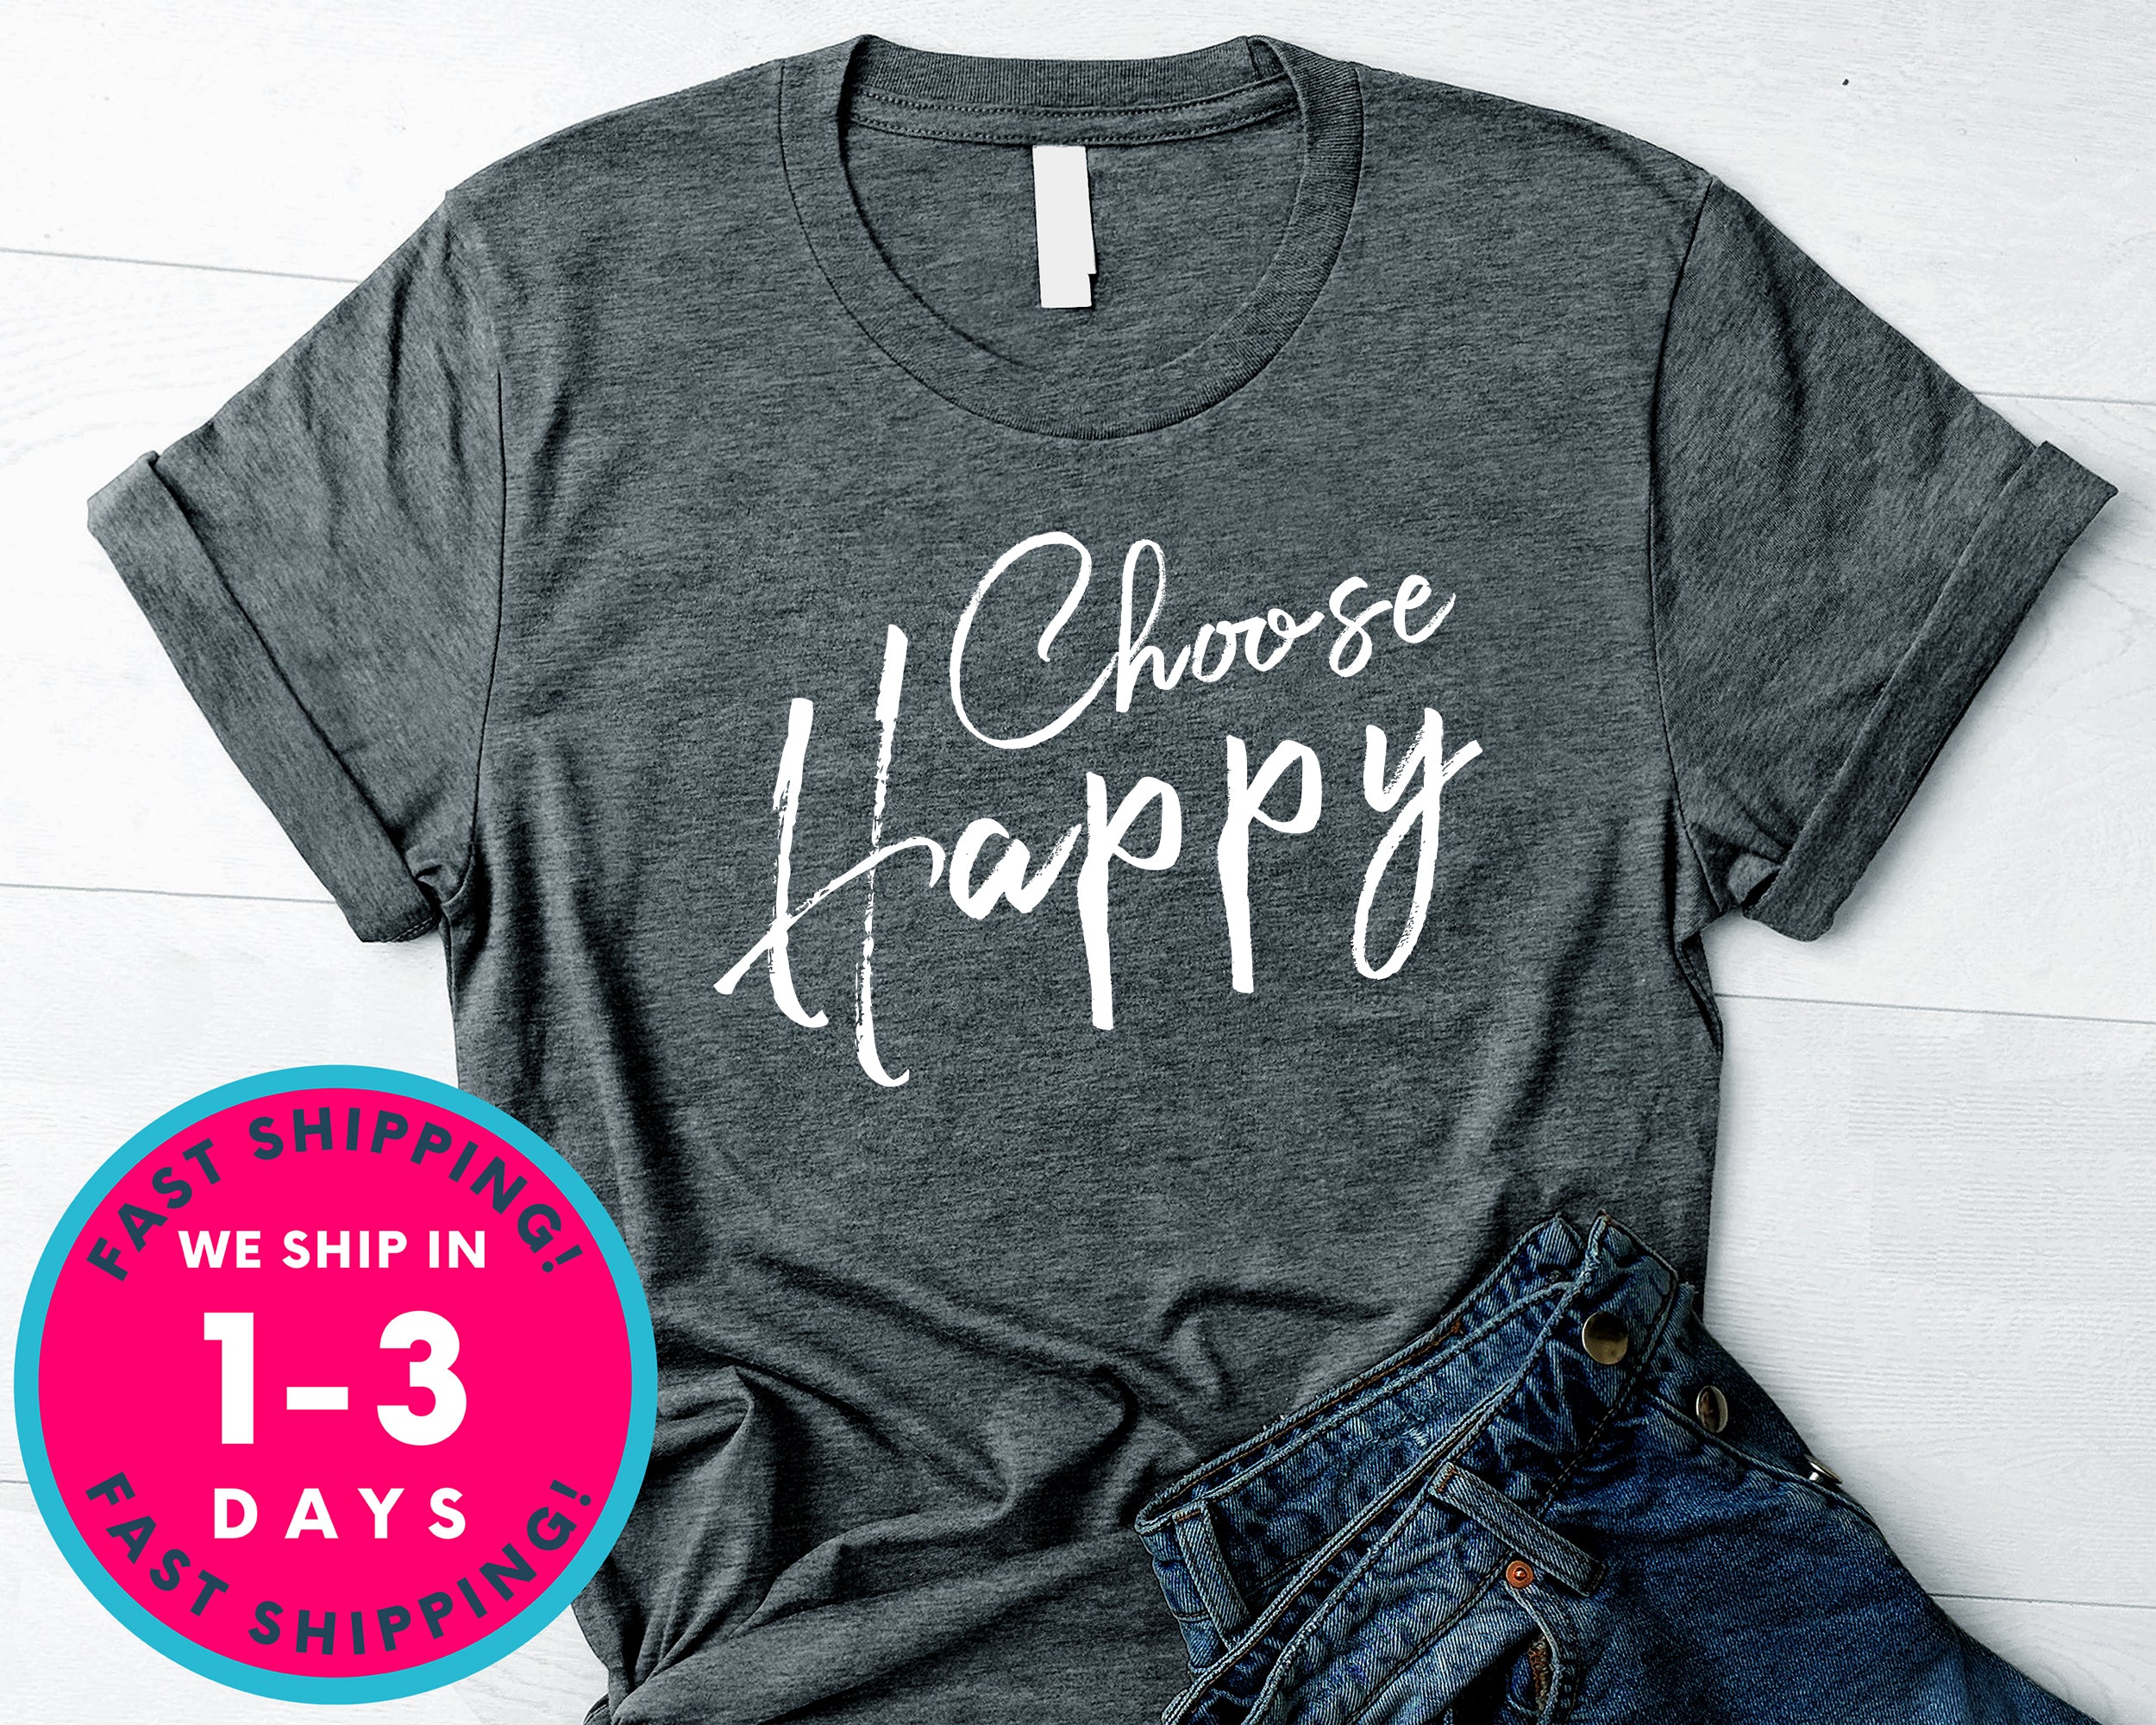 Choose Happy T-Shirt - Inspirational Quotes Saying Shirt